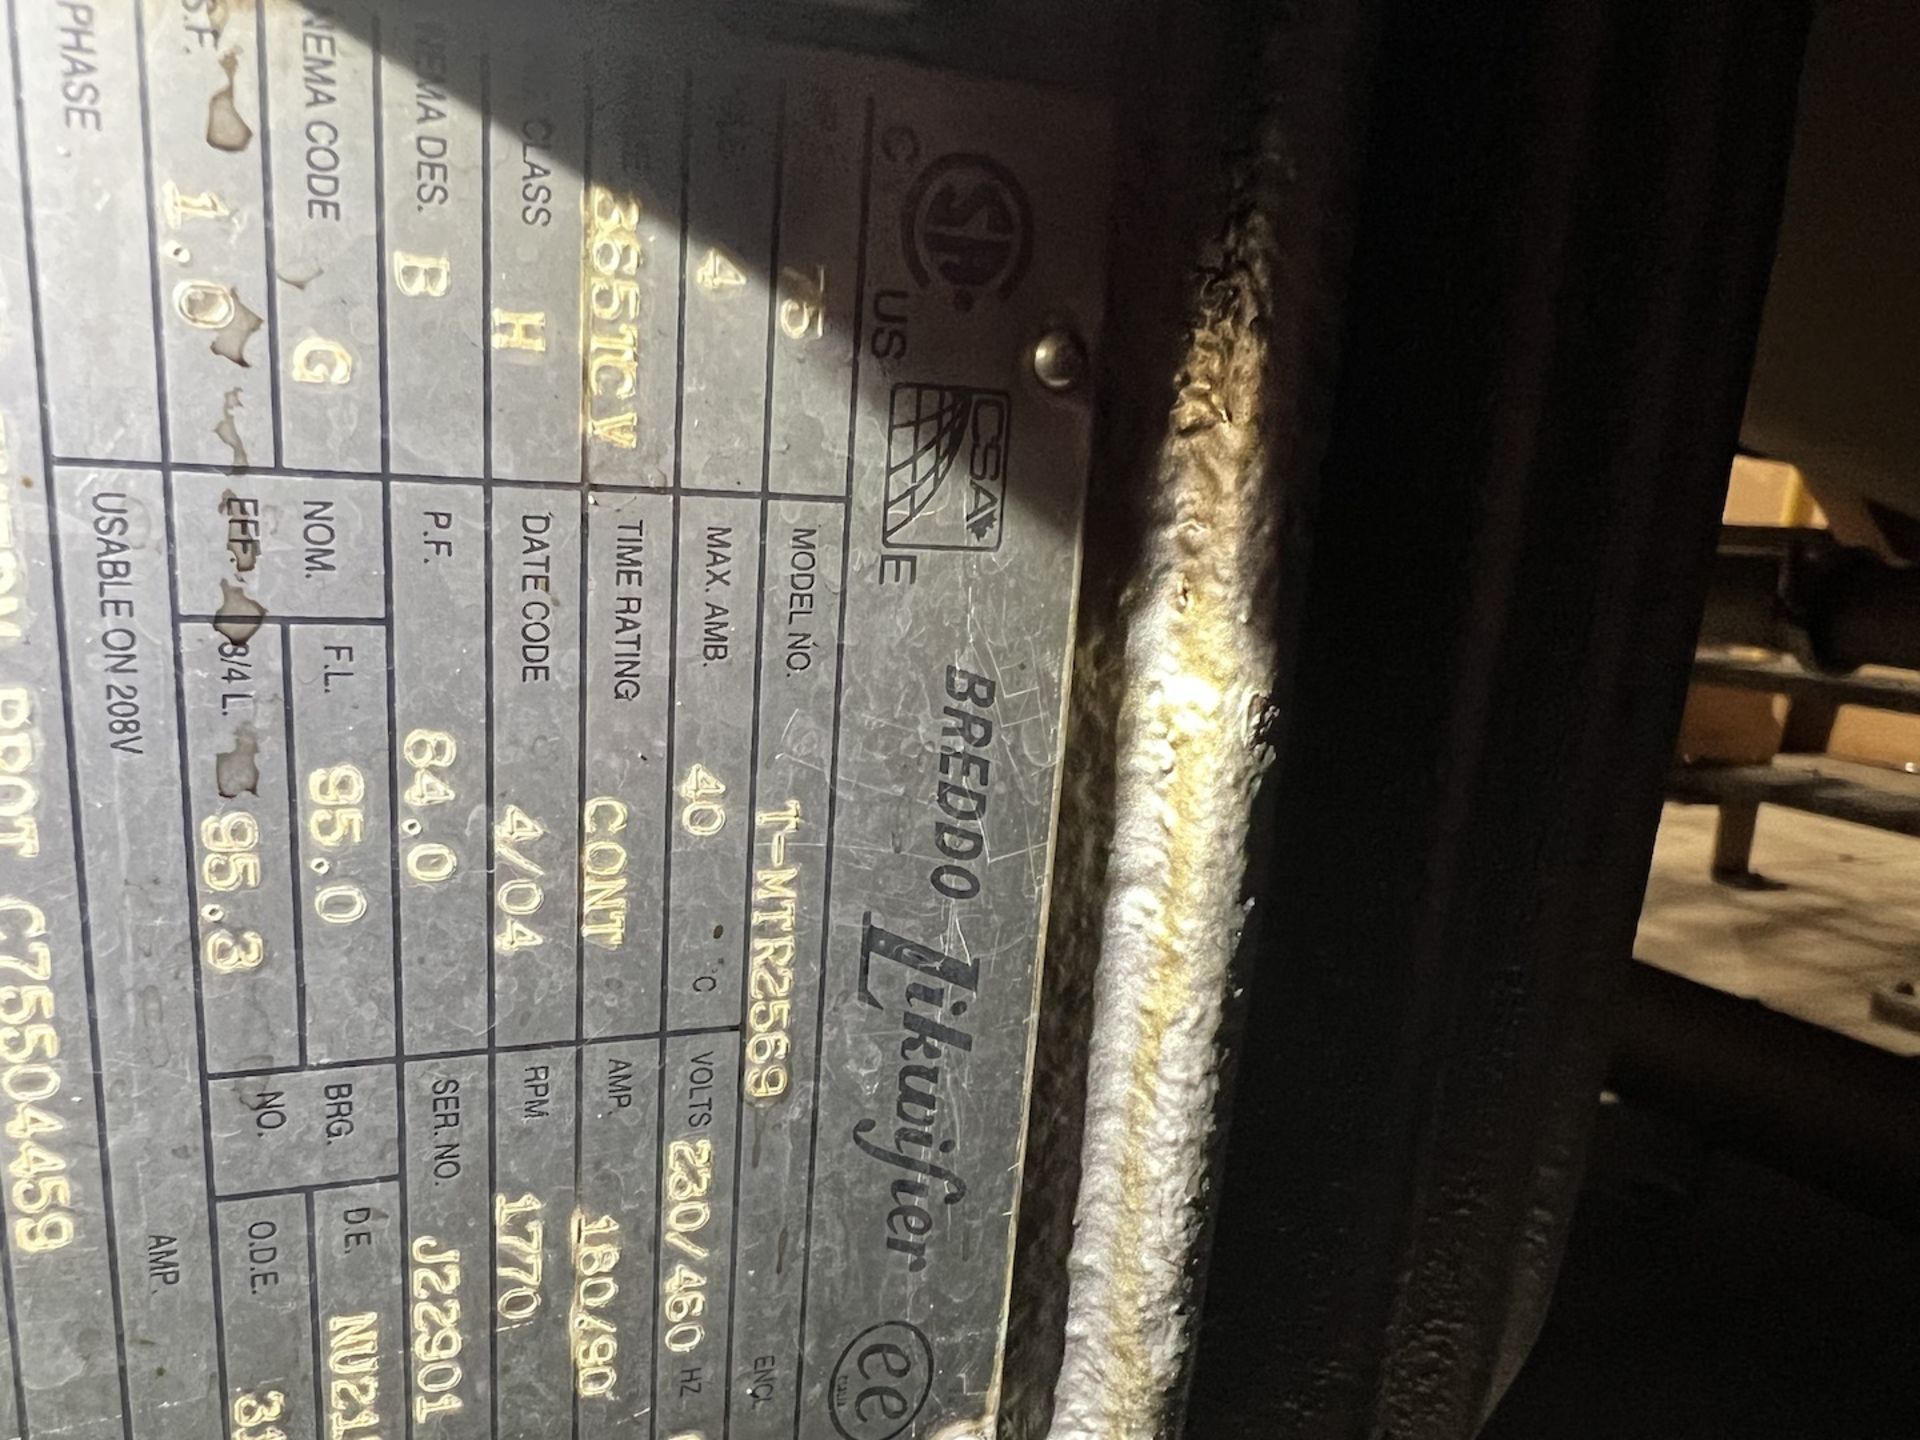 BREDDO SQUARE 500 GALLON LIKWIFIER, MODEL LOSI, S/N D-504457-04072, OFFSET 75-HP MOTOR, 1770 RPM, - Image 29 of 32